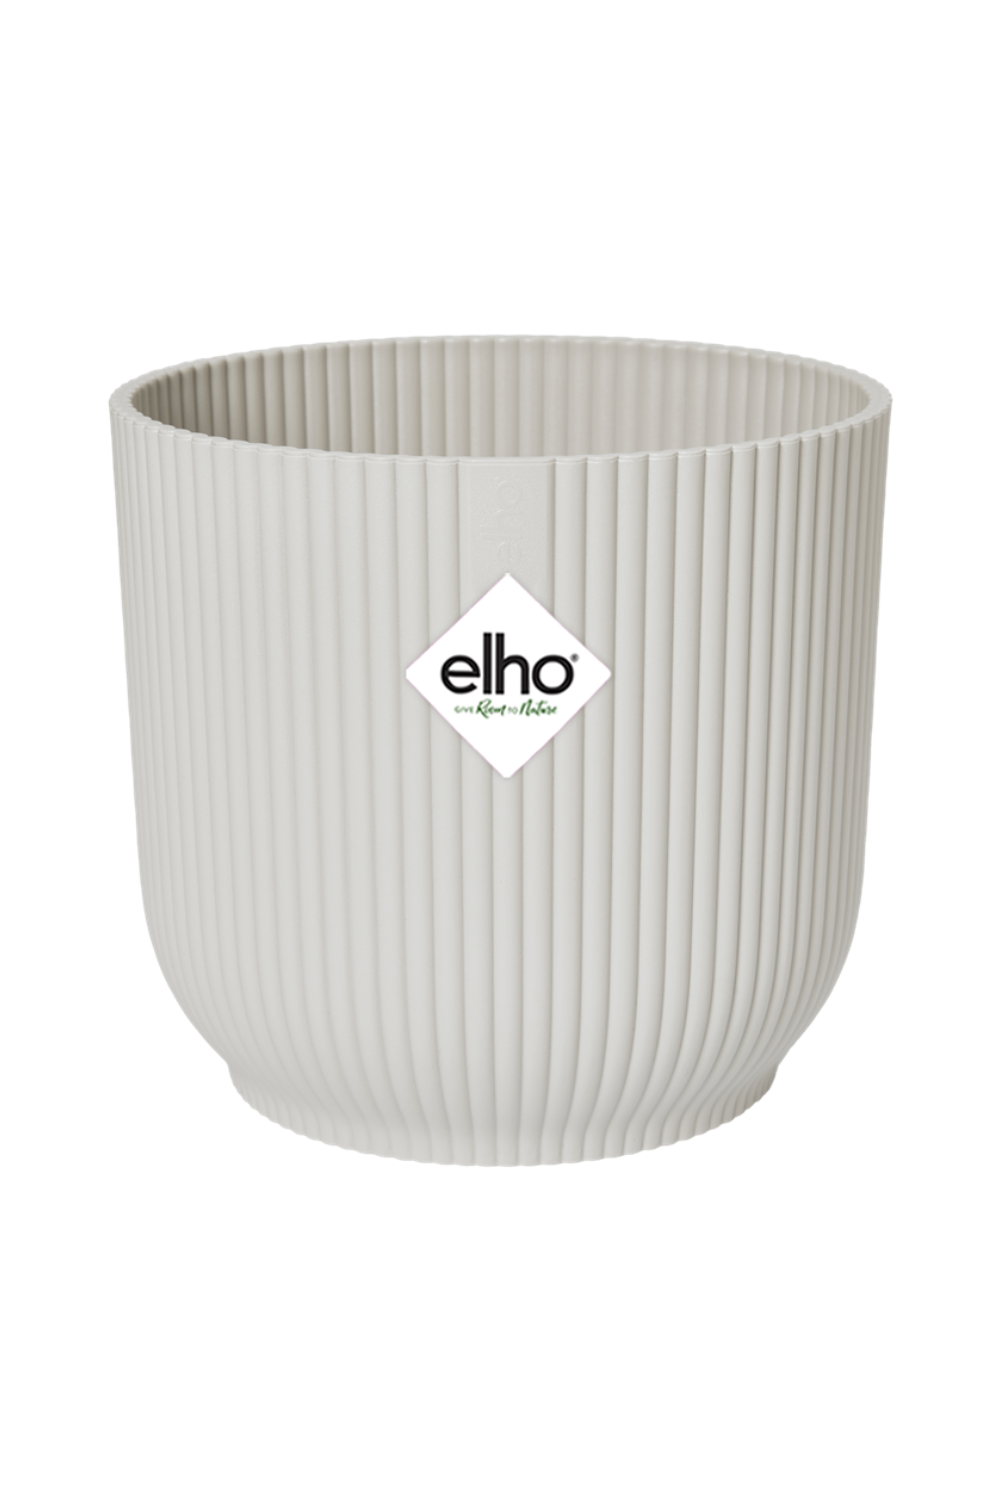 Bloempot Elho Vibes Fold rond 14 cm Silky White